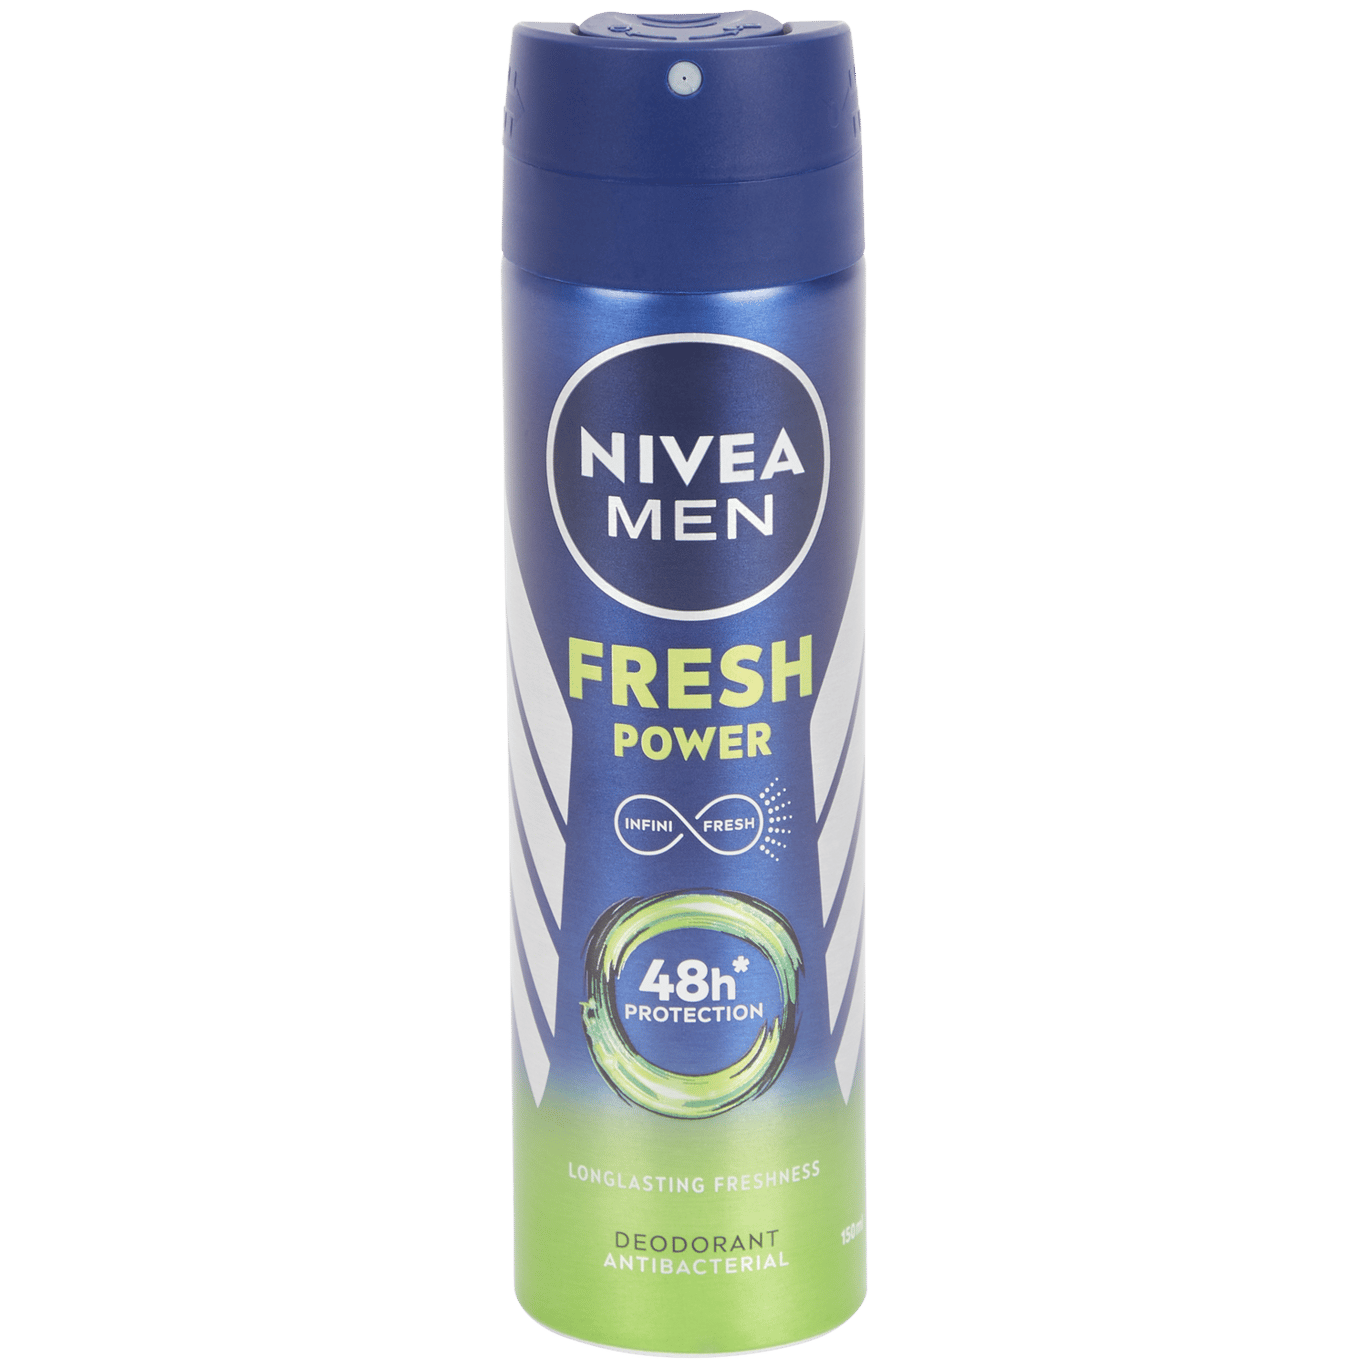 Deodorante Nivea Men Fresh Power